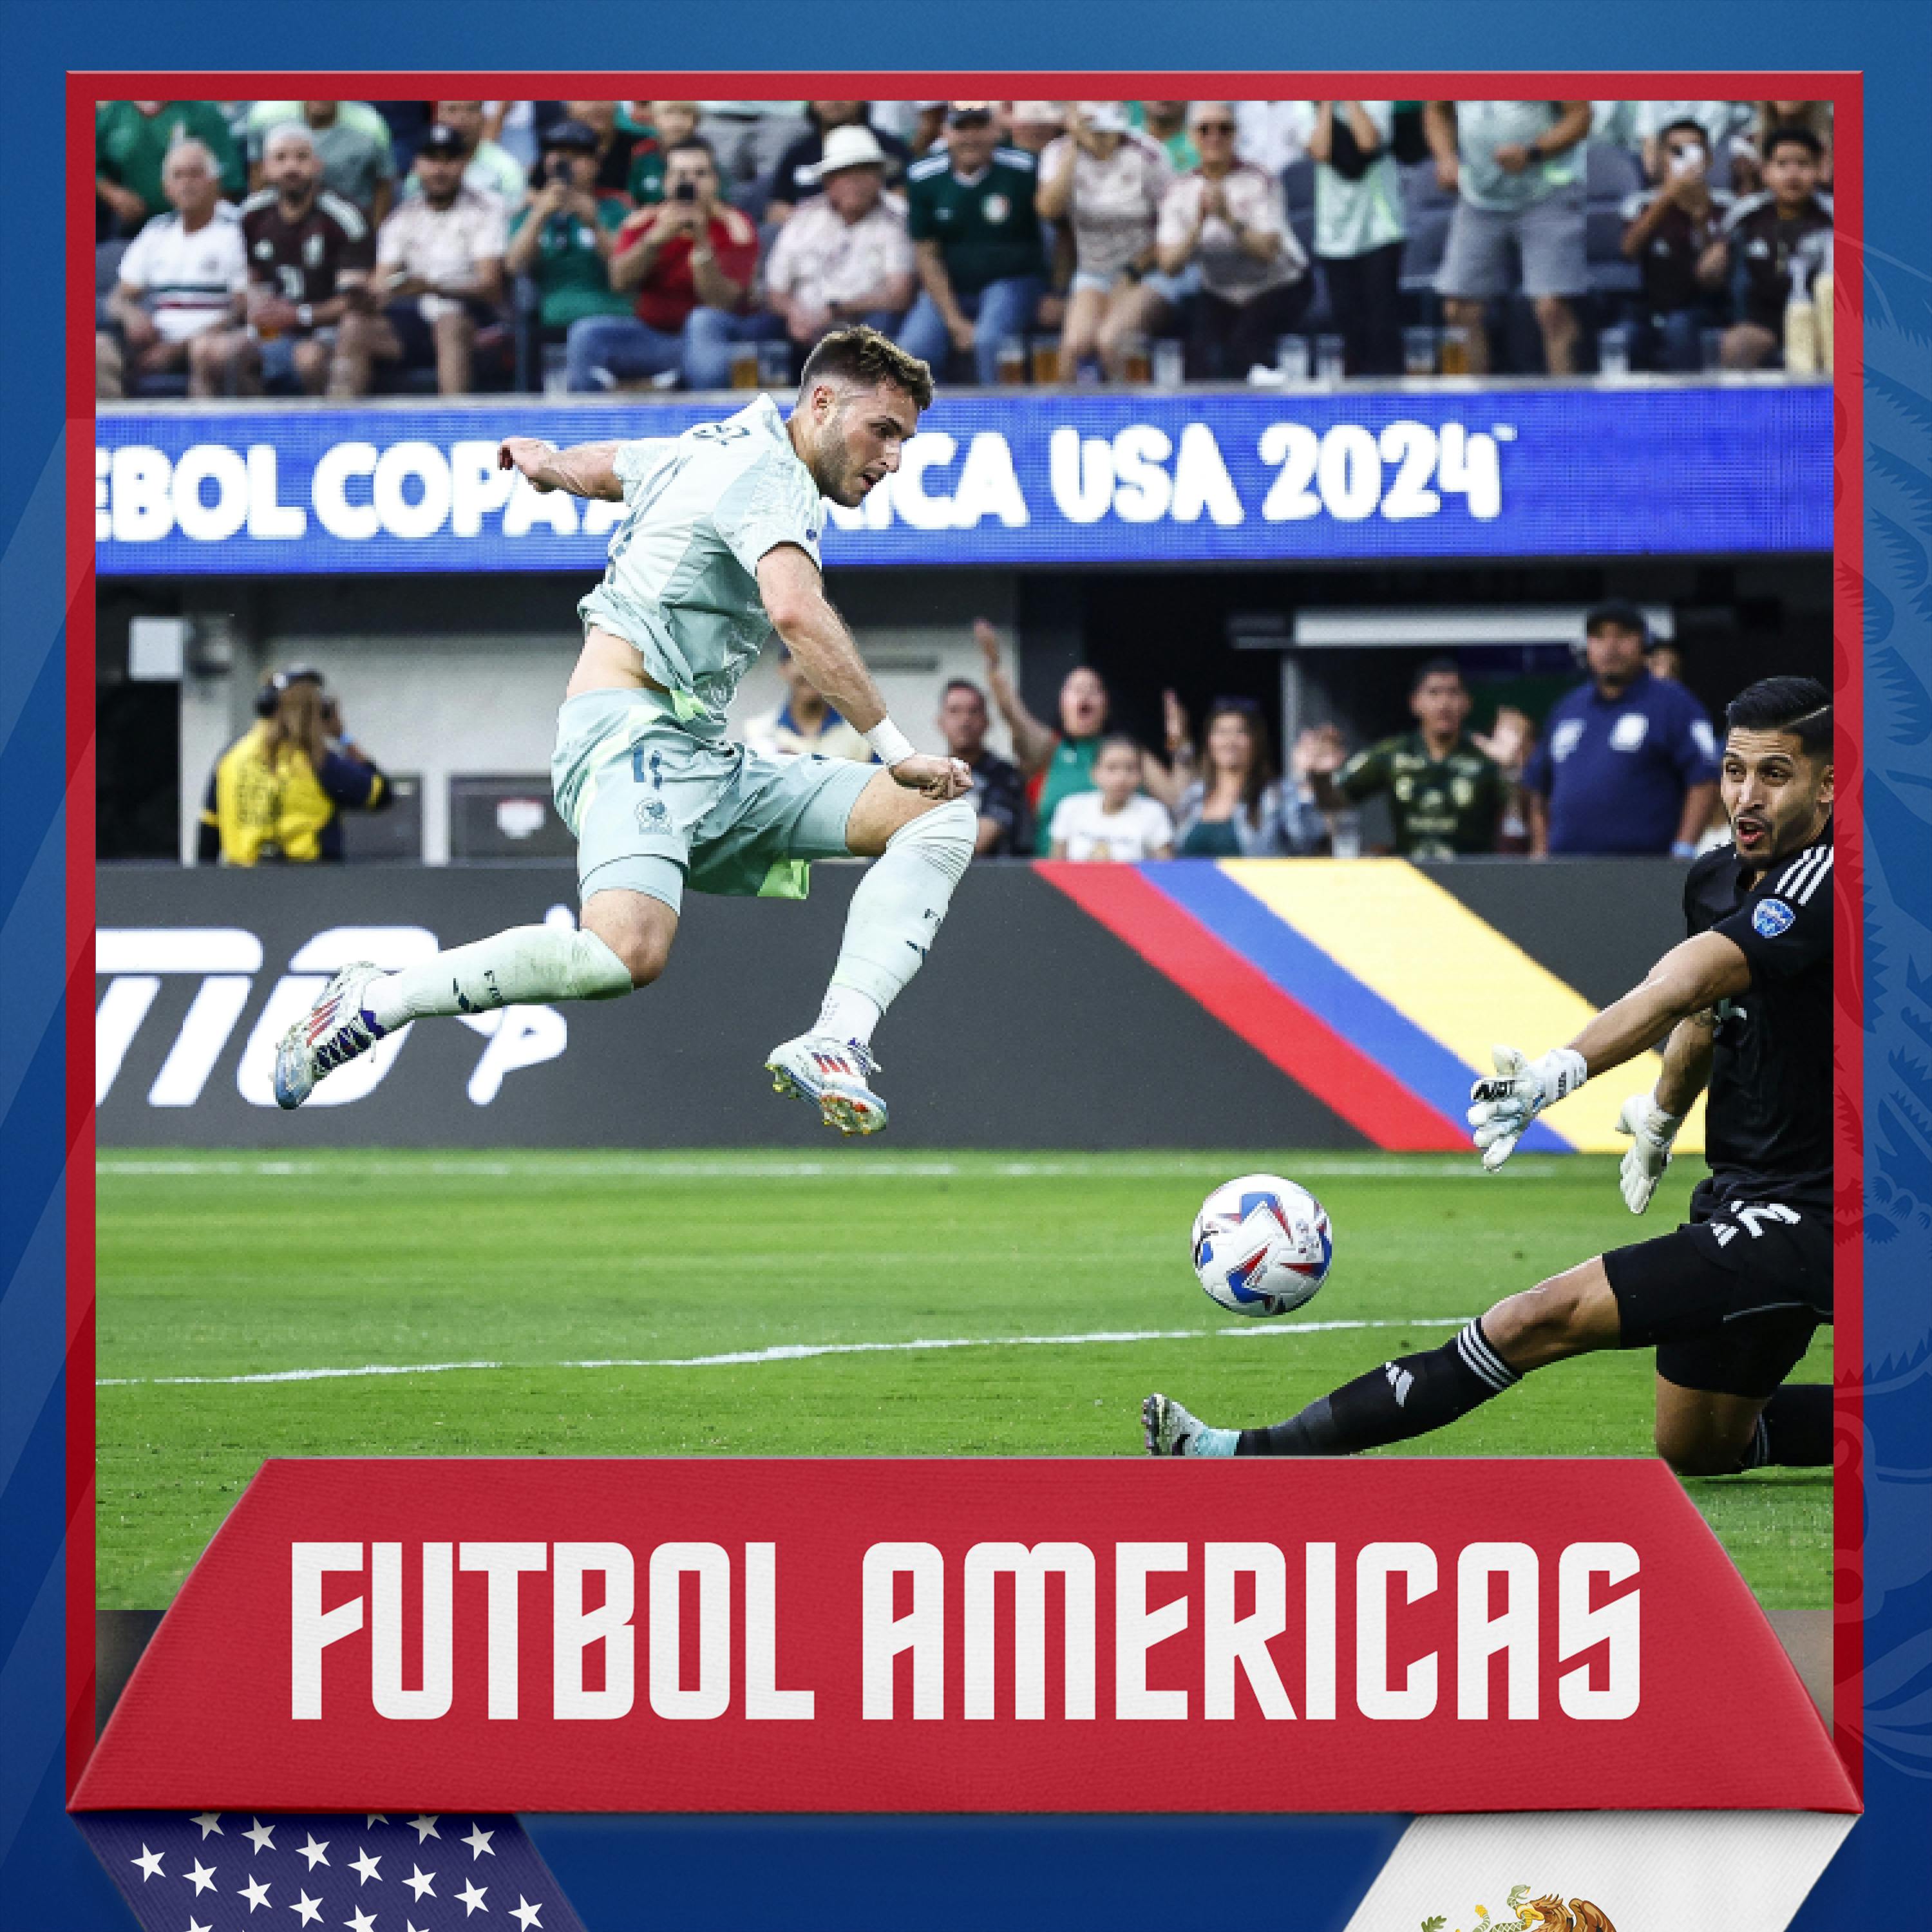 Futbol Americas: Slumping Santi Gimenez